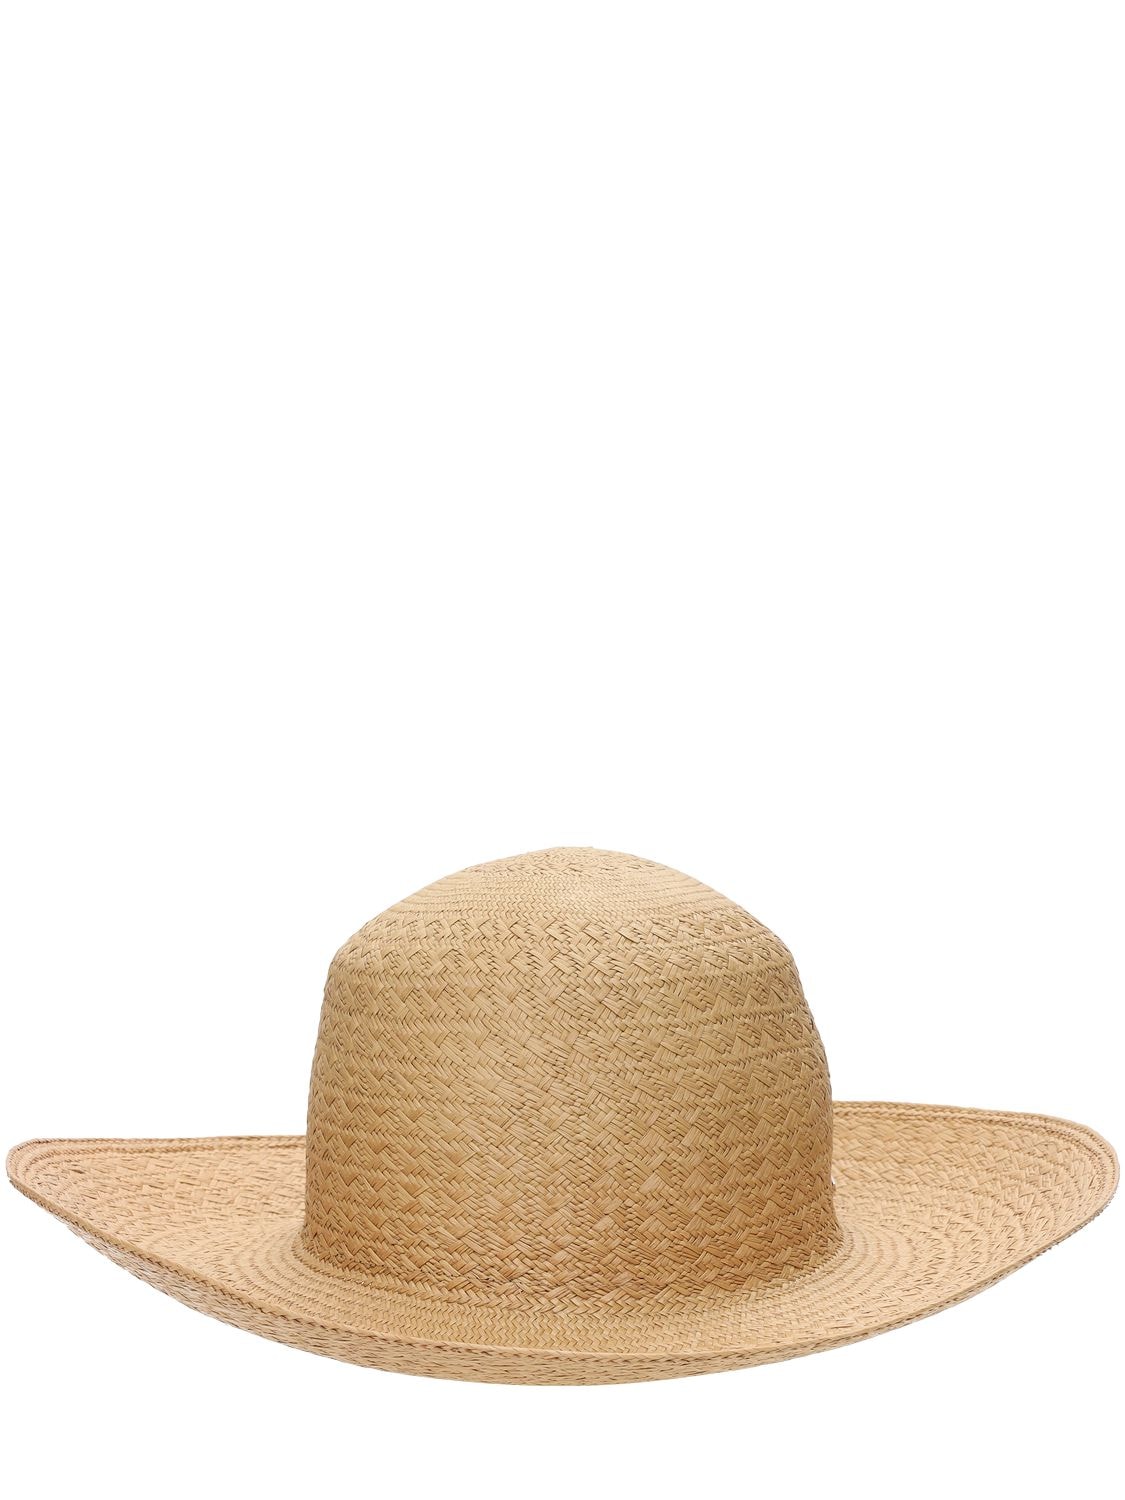 SAINT LAURENT PANAMA STRAW HAT,73IG1N061-OTCWMA2